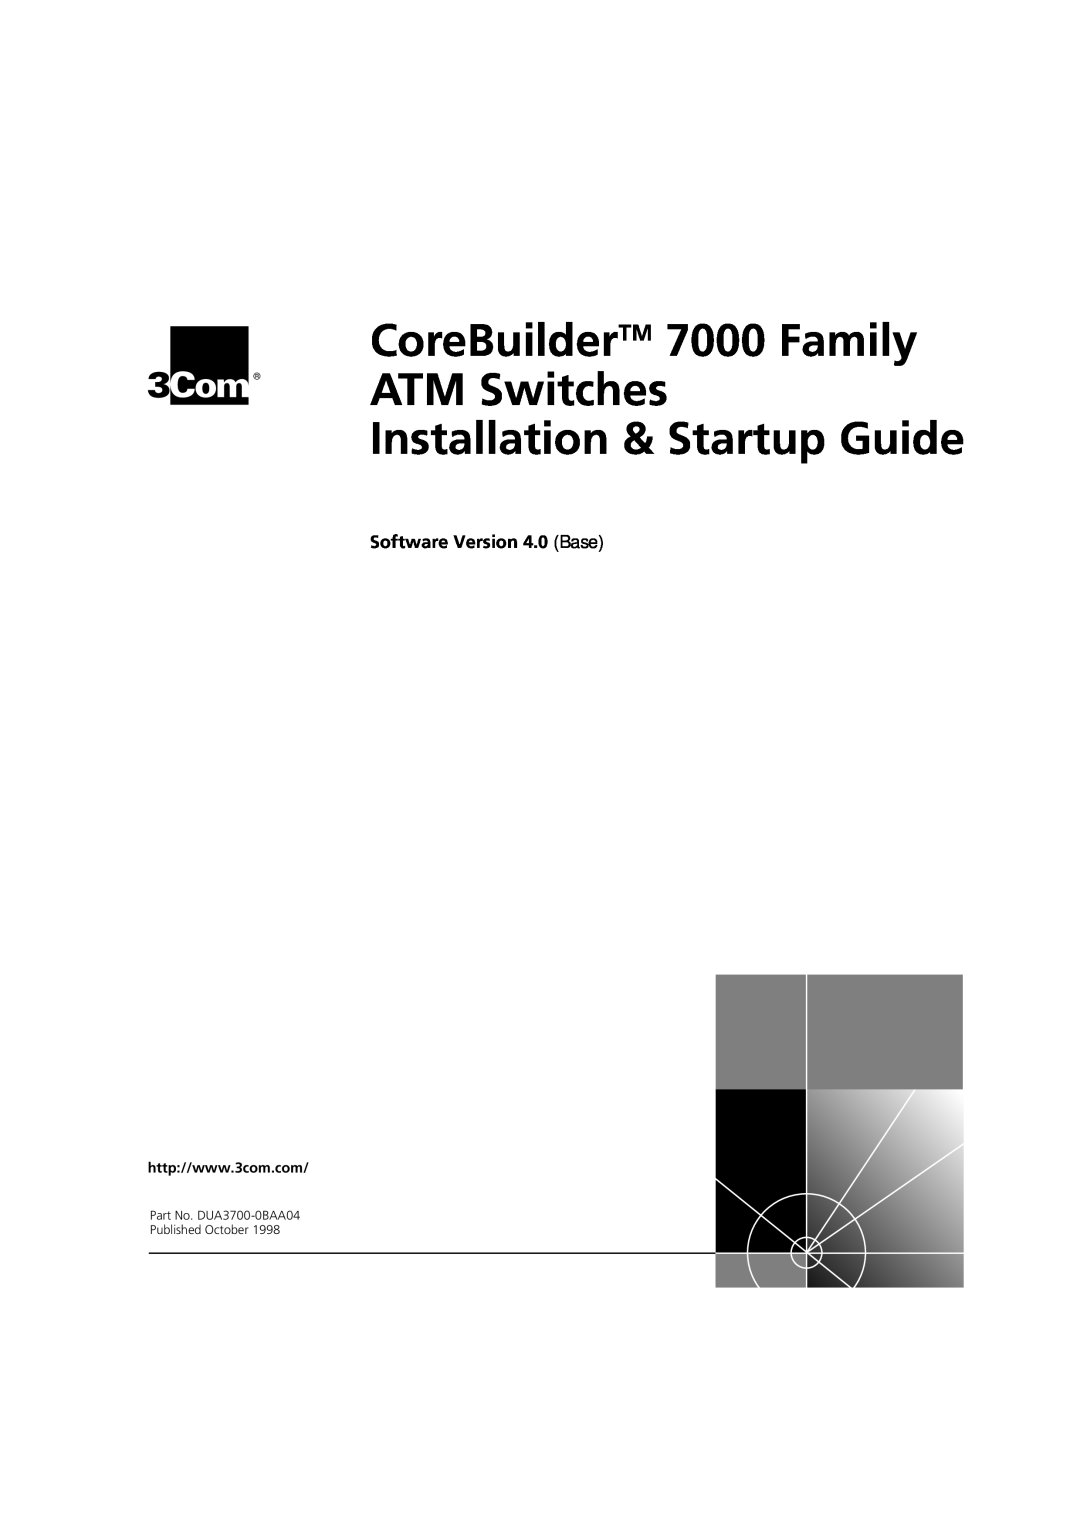 3Com DUA3700-0BAA04 manual CoreBuilderTM 7000 Family ATM Switches Installation & Startup Guide, Software Version 4.0 Base 